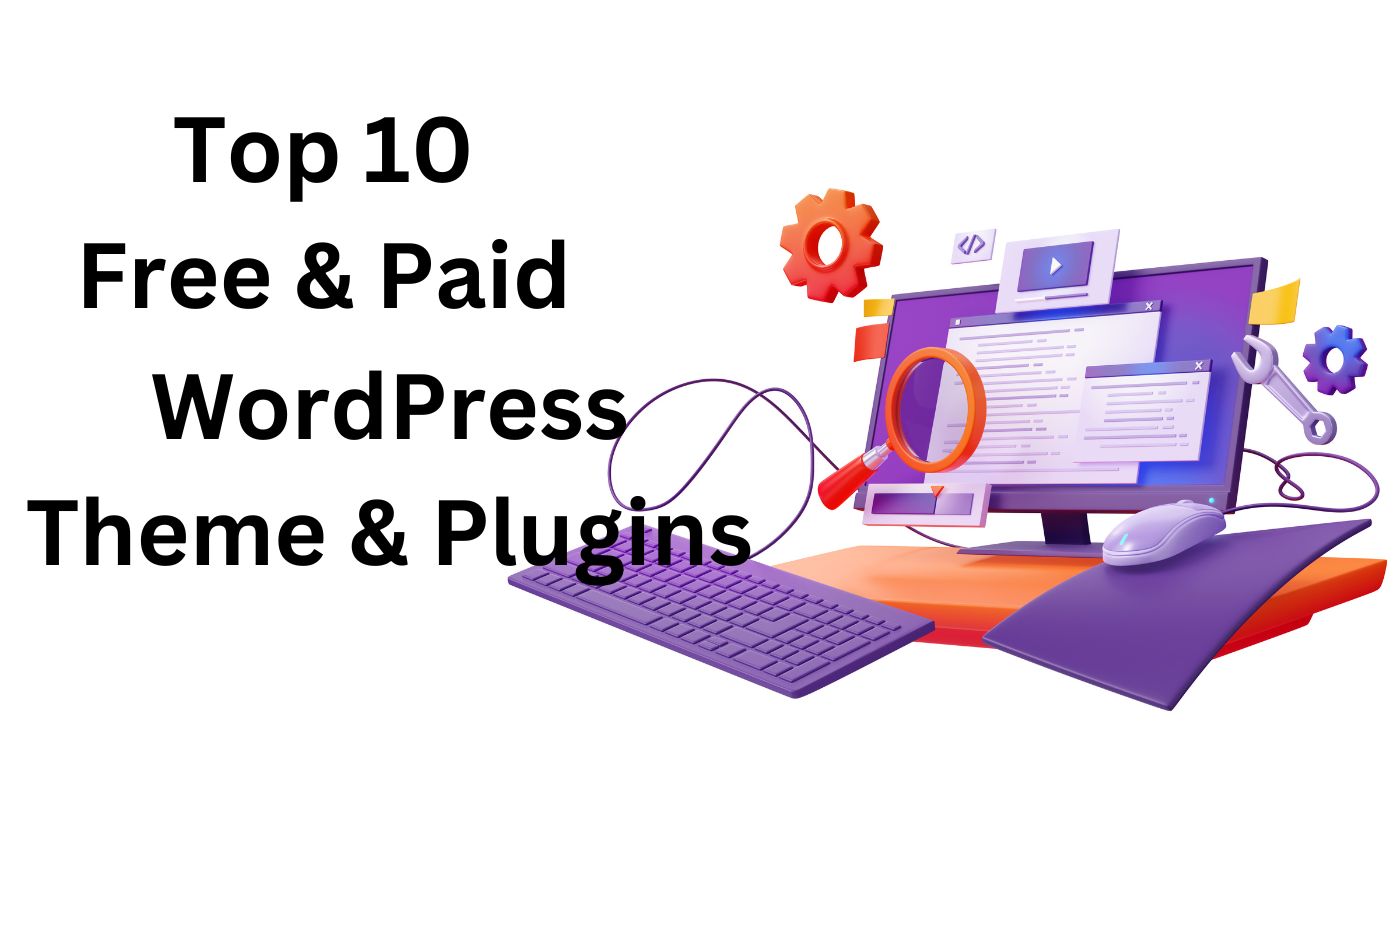 Top 10 Free & Paid WordPress Themes & Plugins